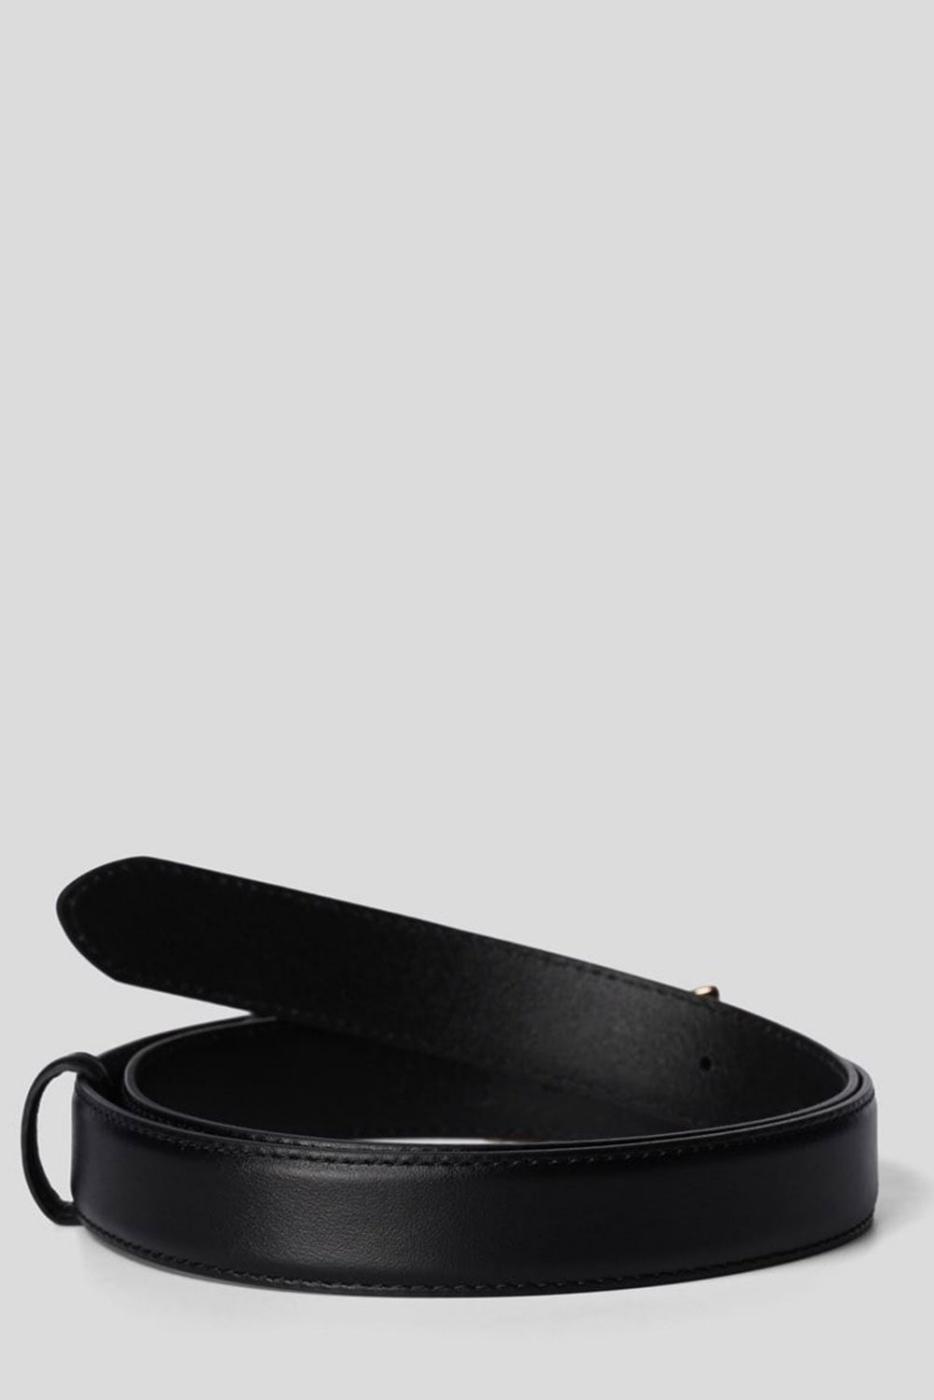 Cinturón Karl Lagerfeld K/Signature Negro Dorado